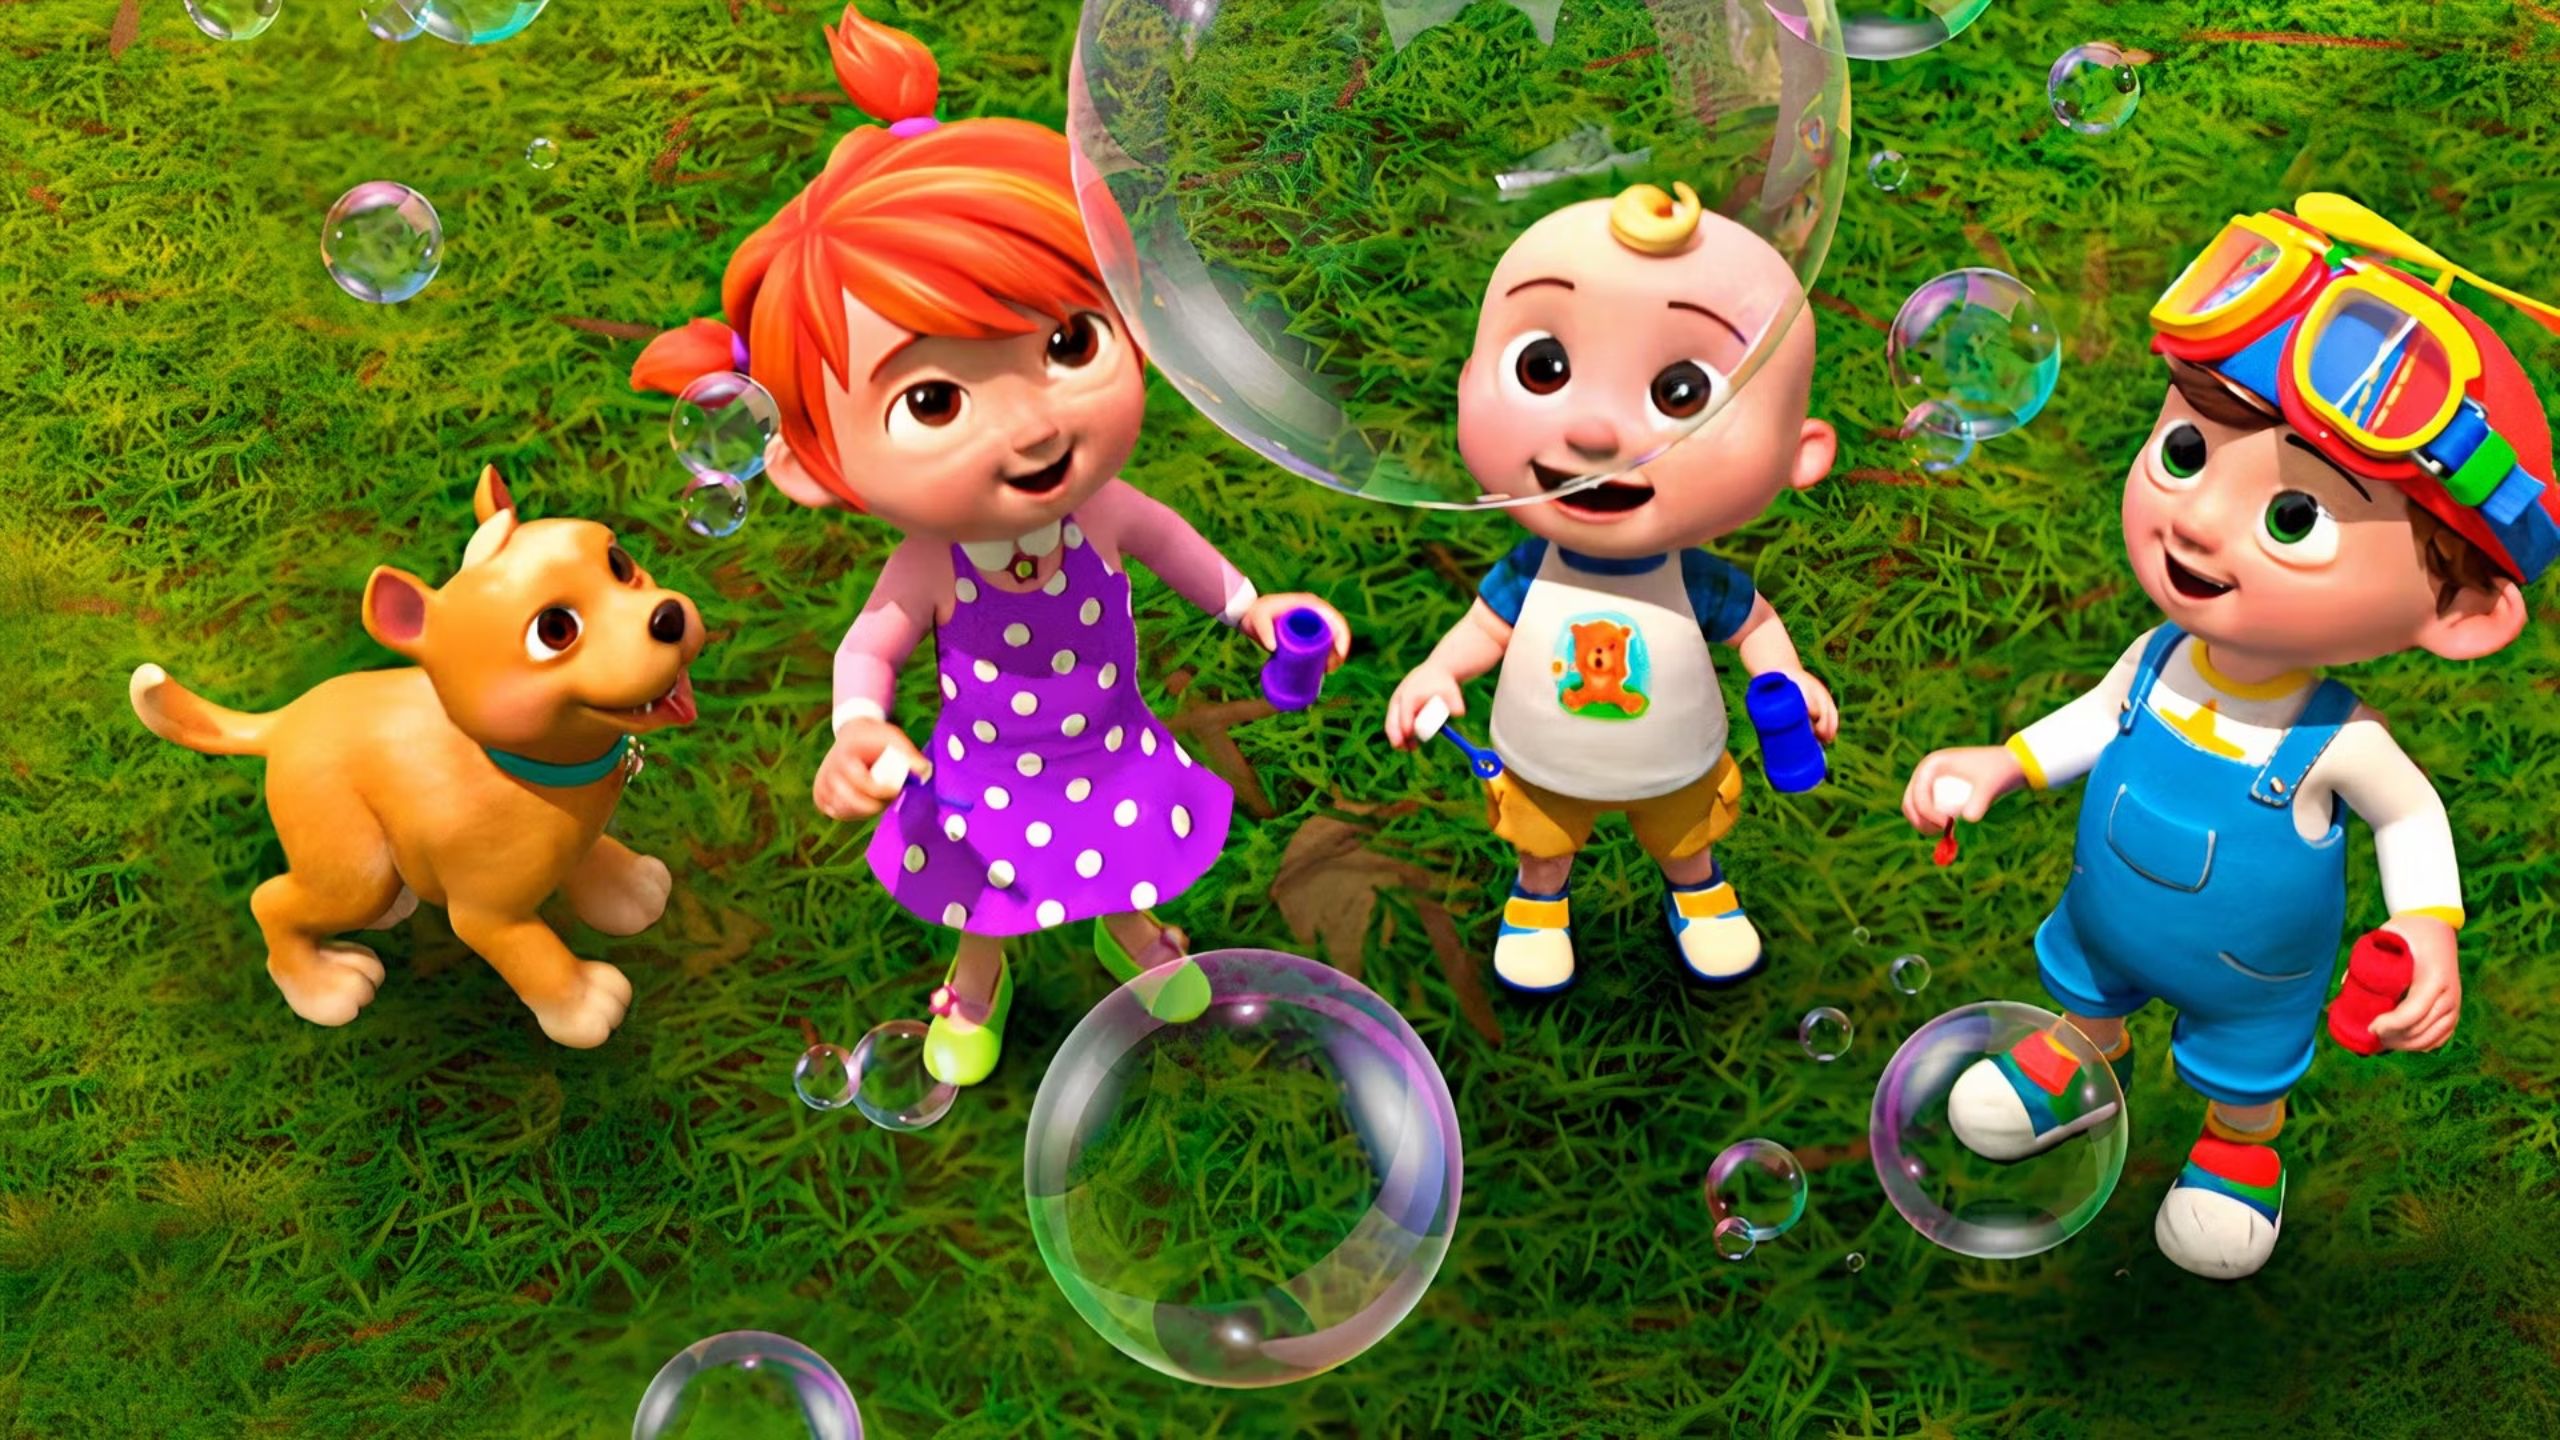 شخصیت های تلویزیون کوکاملون با حباب